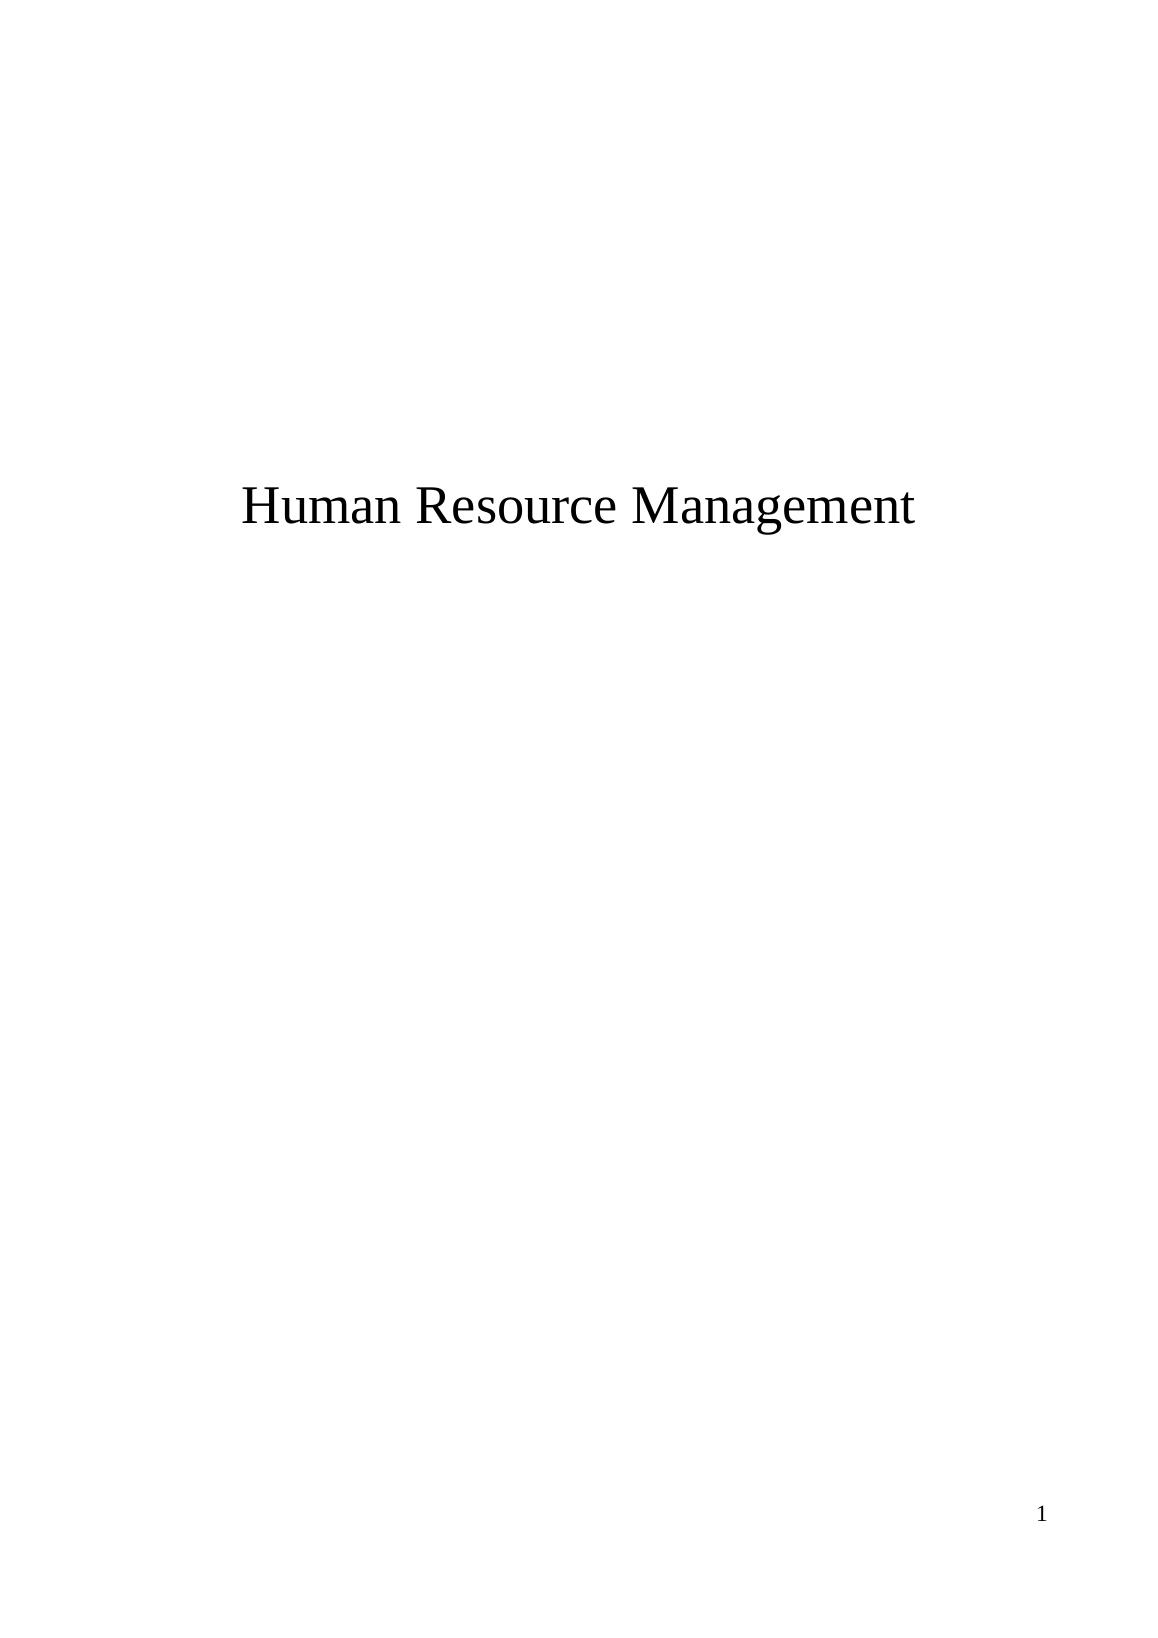 Human Resource Management INTRODUCTION 4 TASK 14_1